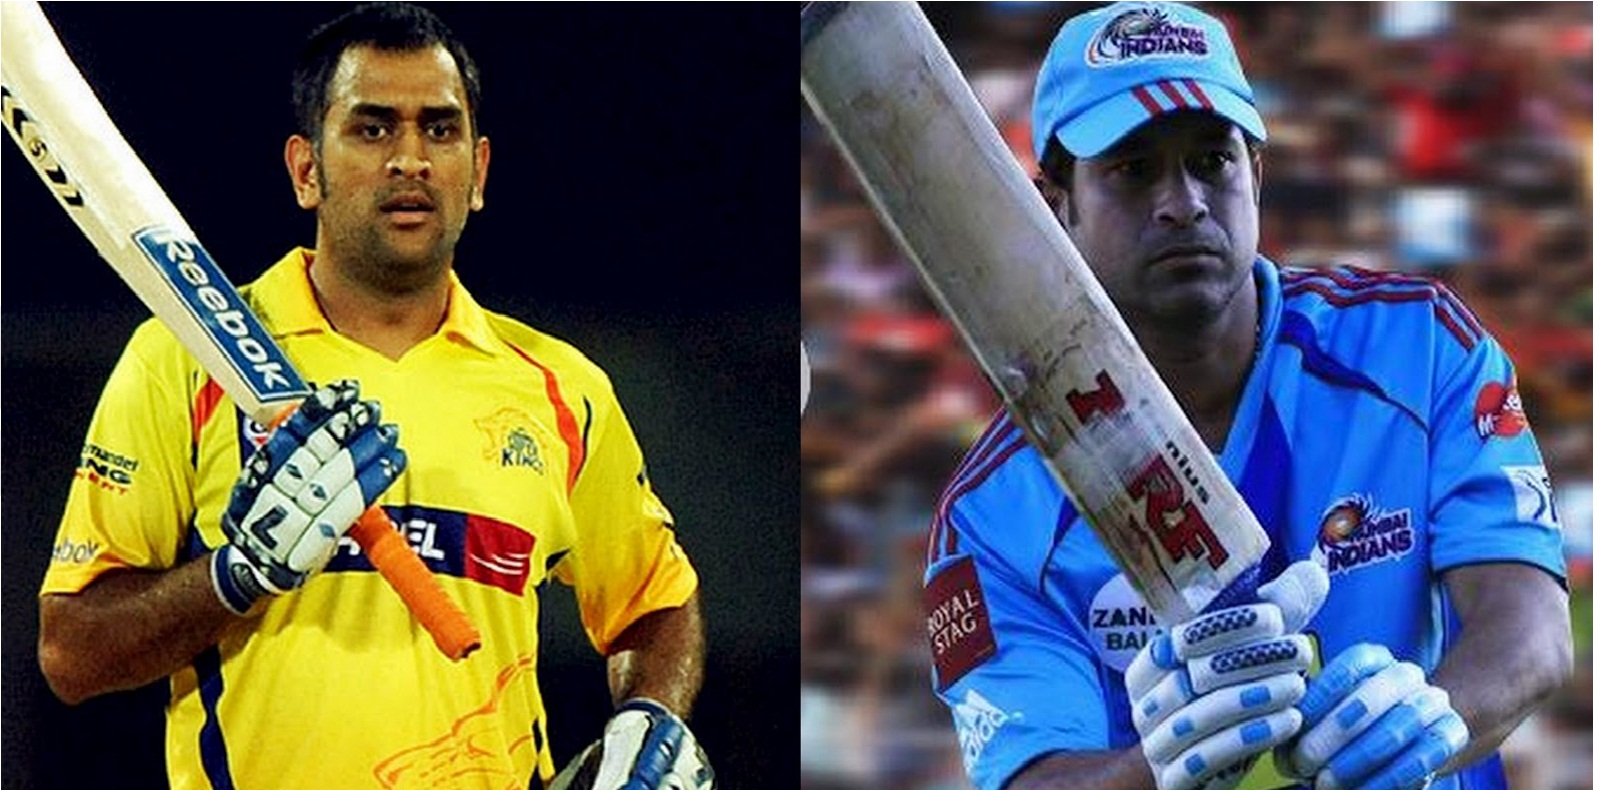 Indian Cricket players Dohni and Sachi